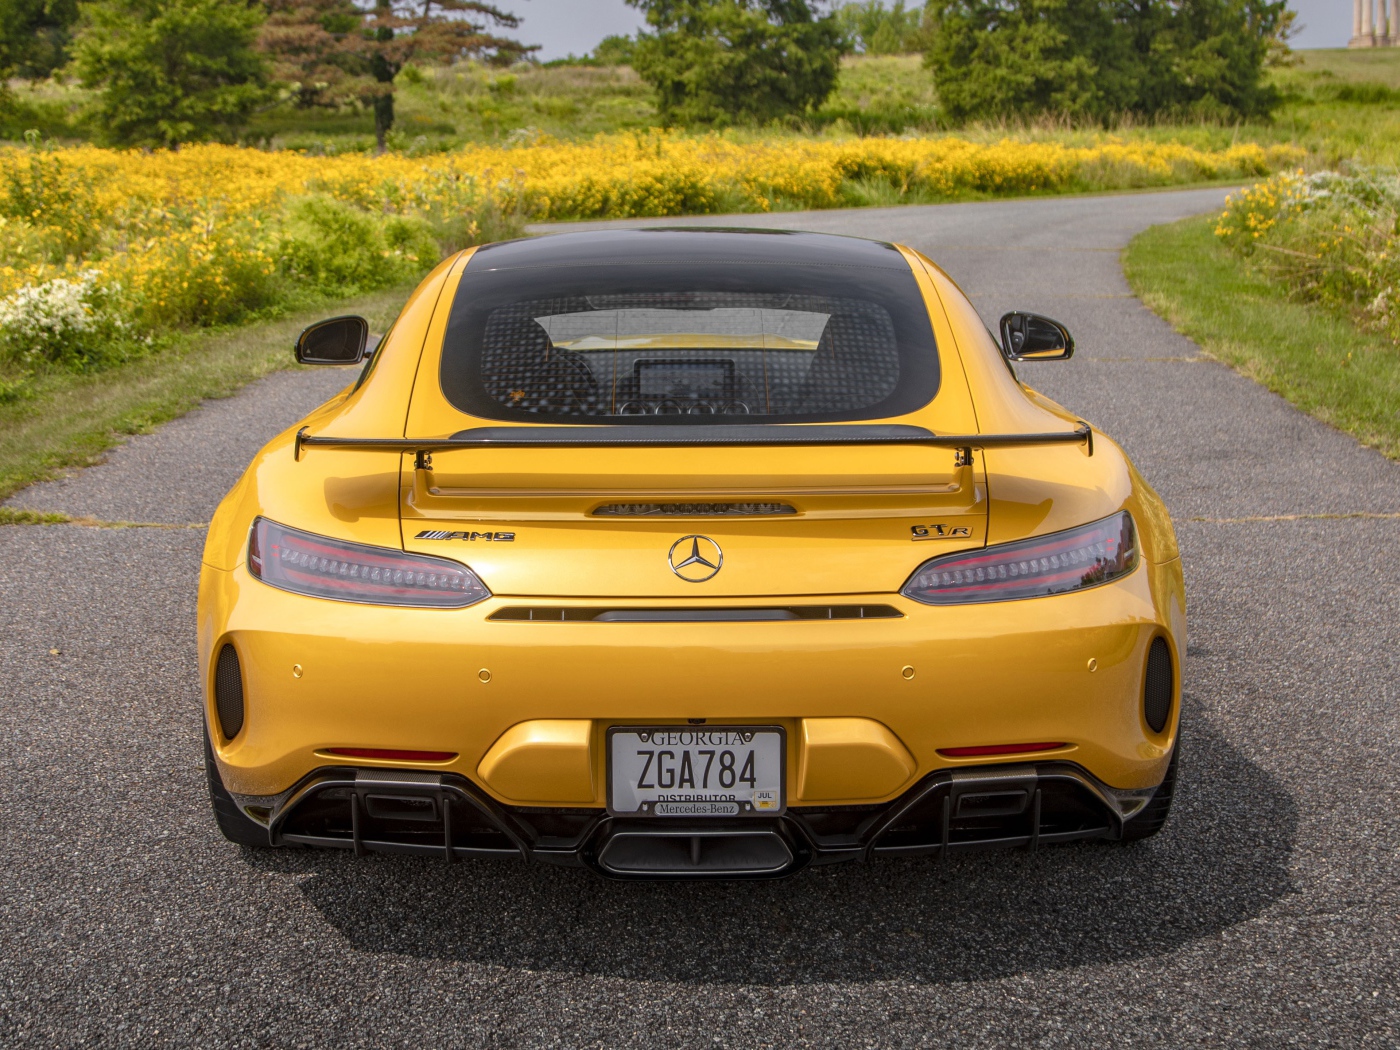 Yellow Mercedes-AMG GT R 2020 car rear view